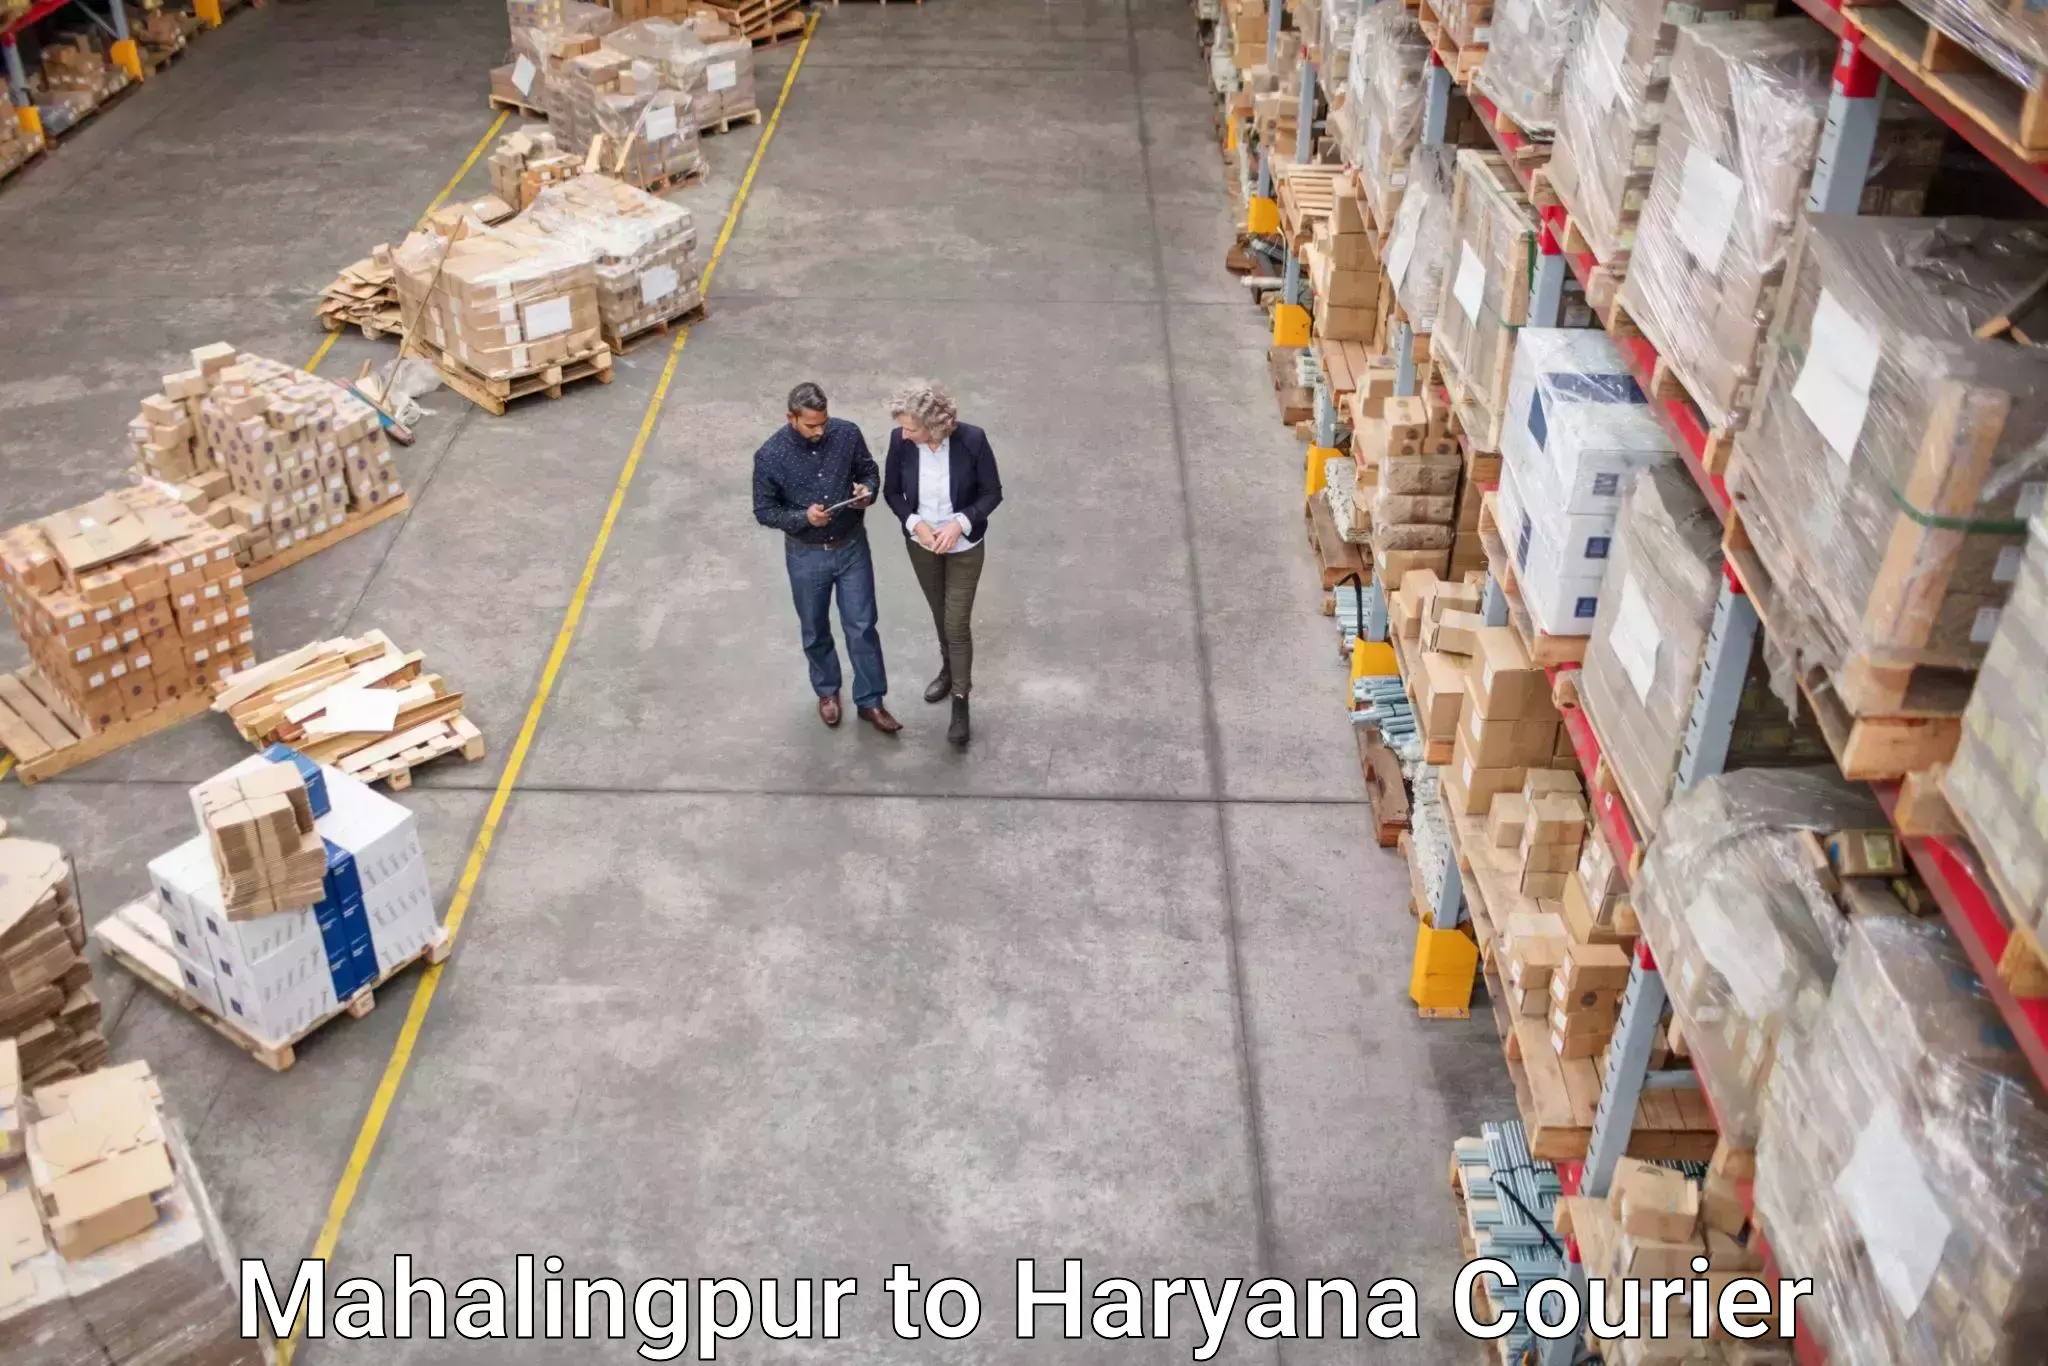 Personalized courier experiences Mahalingpur to Gohana